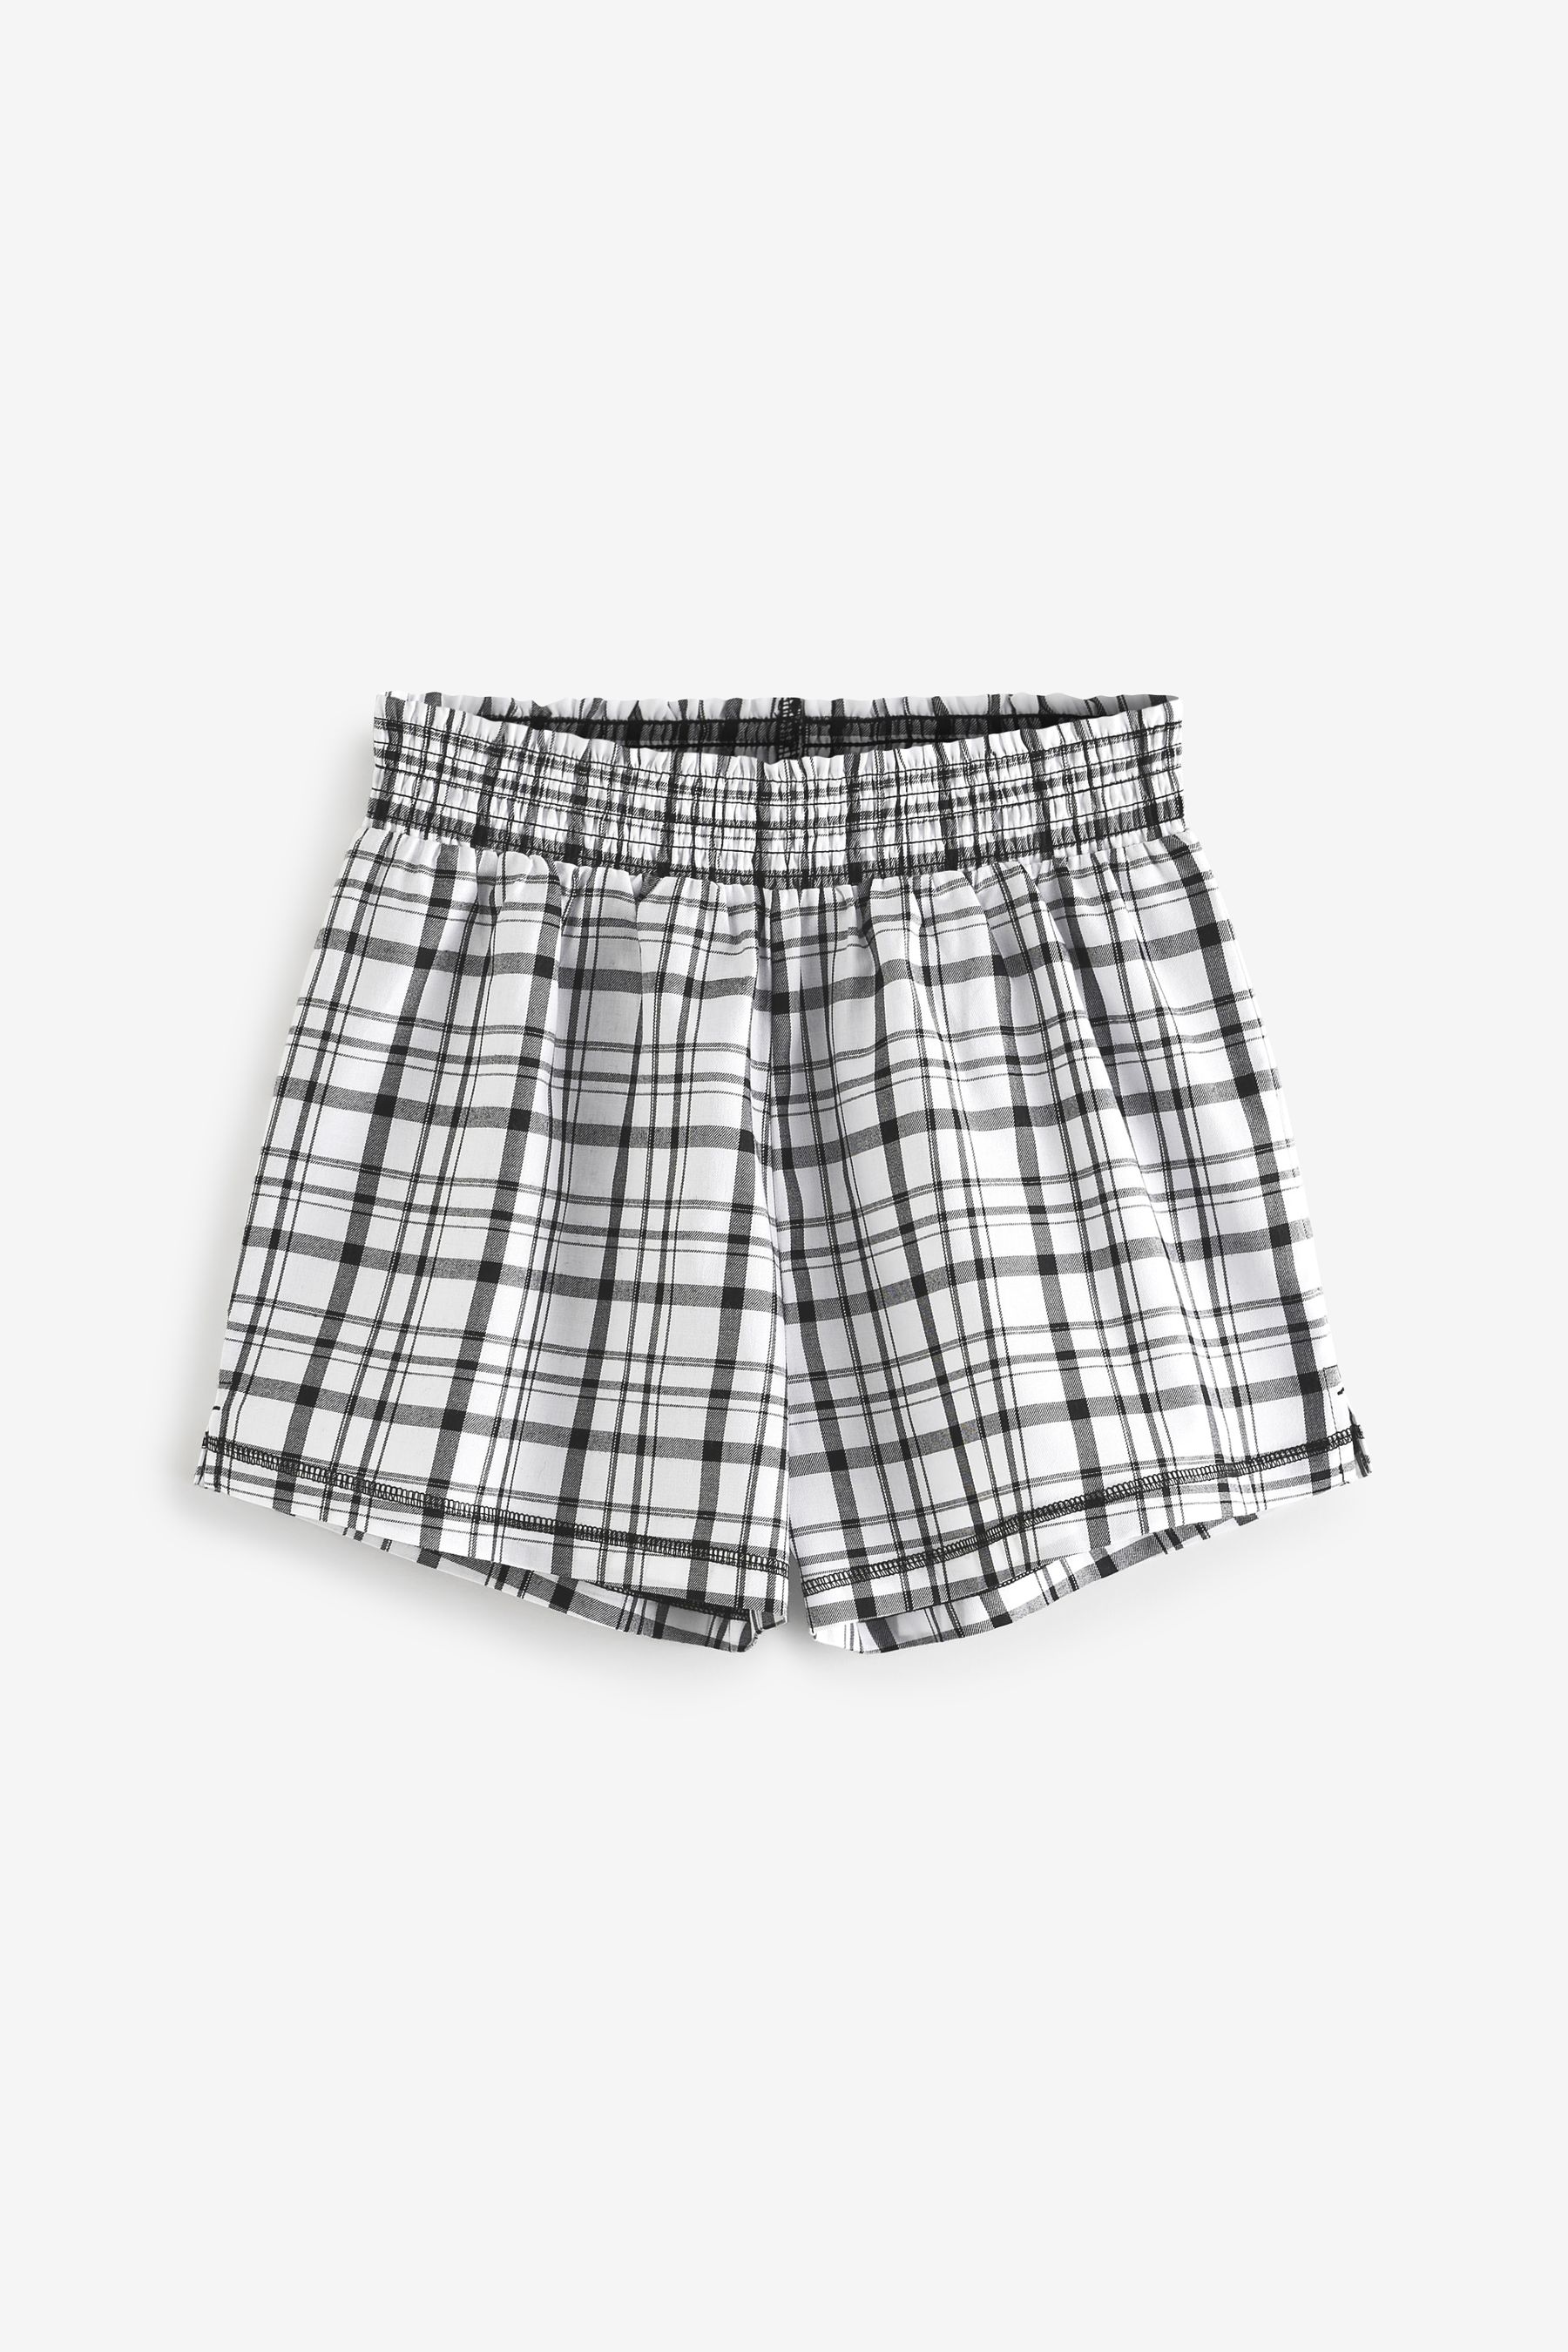 Buy Cotton Short Set Pyjamas from the Next UK online shop